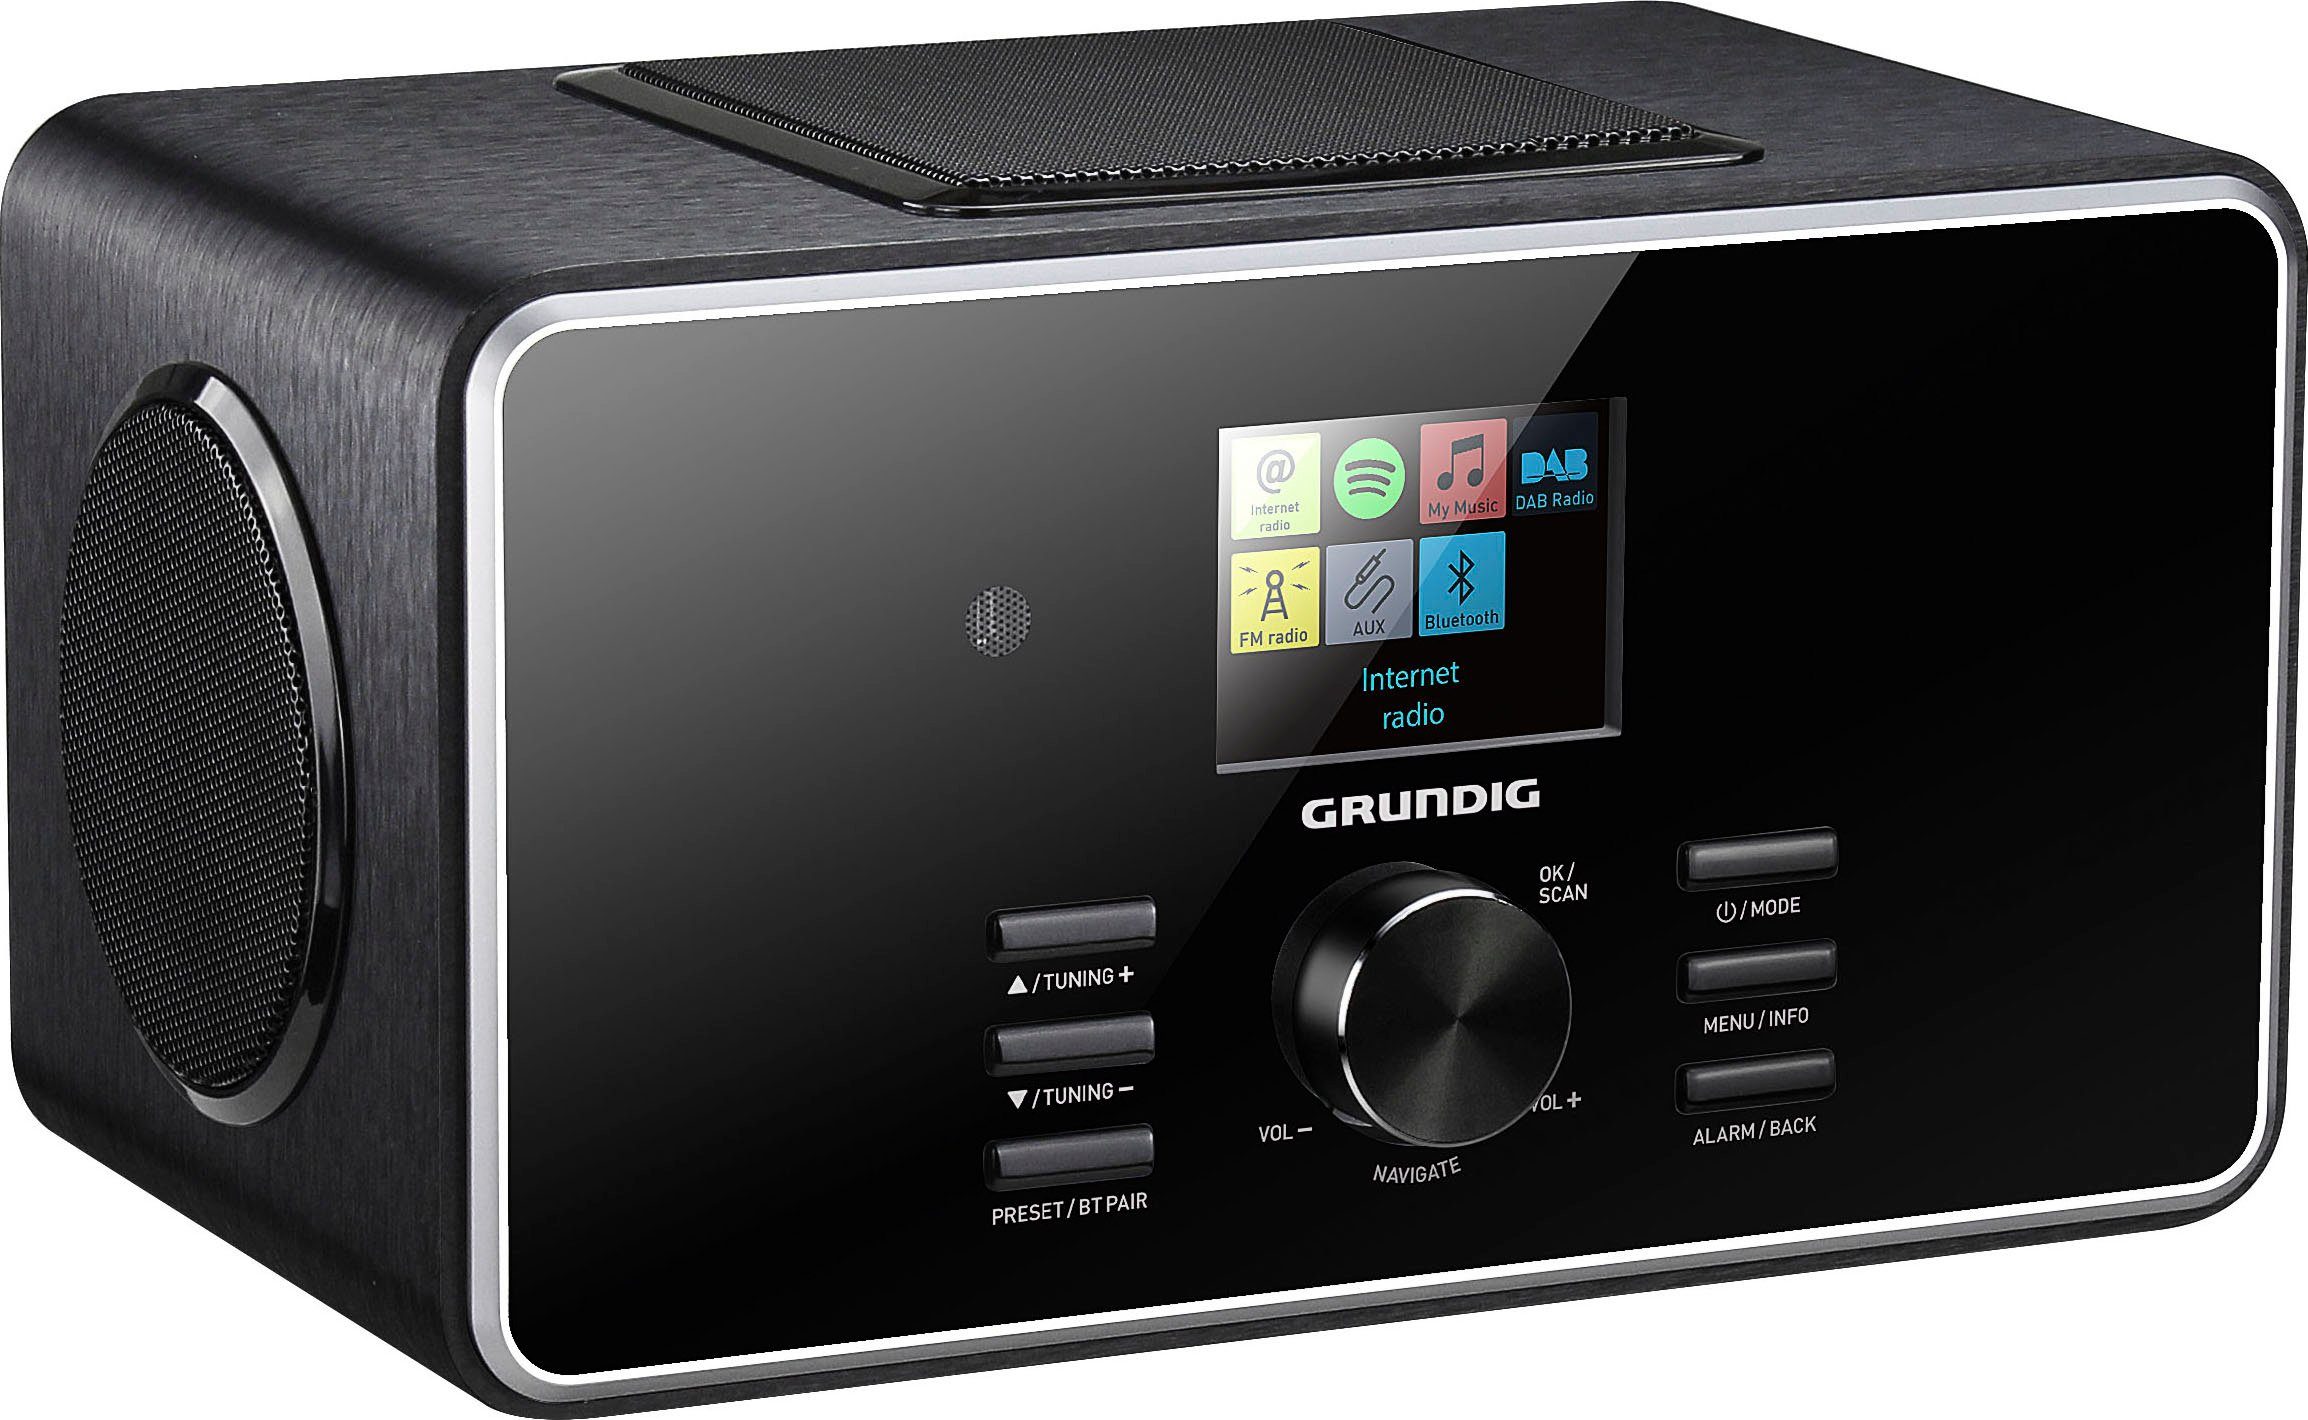 X mit Grundig (Digitalradio (DAB) Digitalradio 6000 (DAB), DTR Internetradio, schwarz 28 W) FM-Tuner RDS,